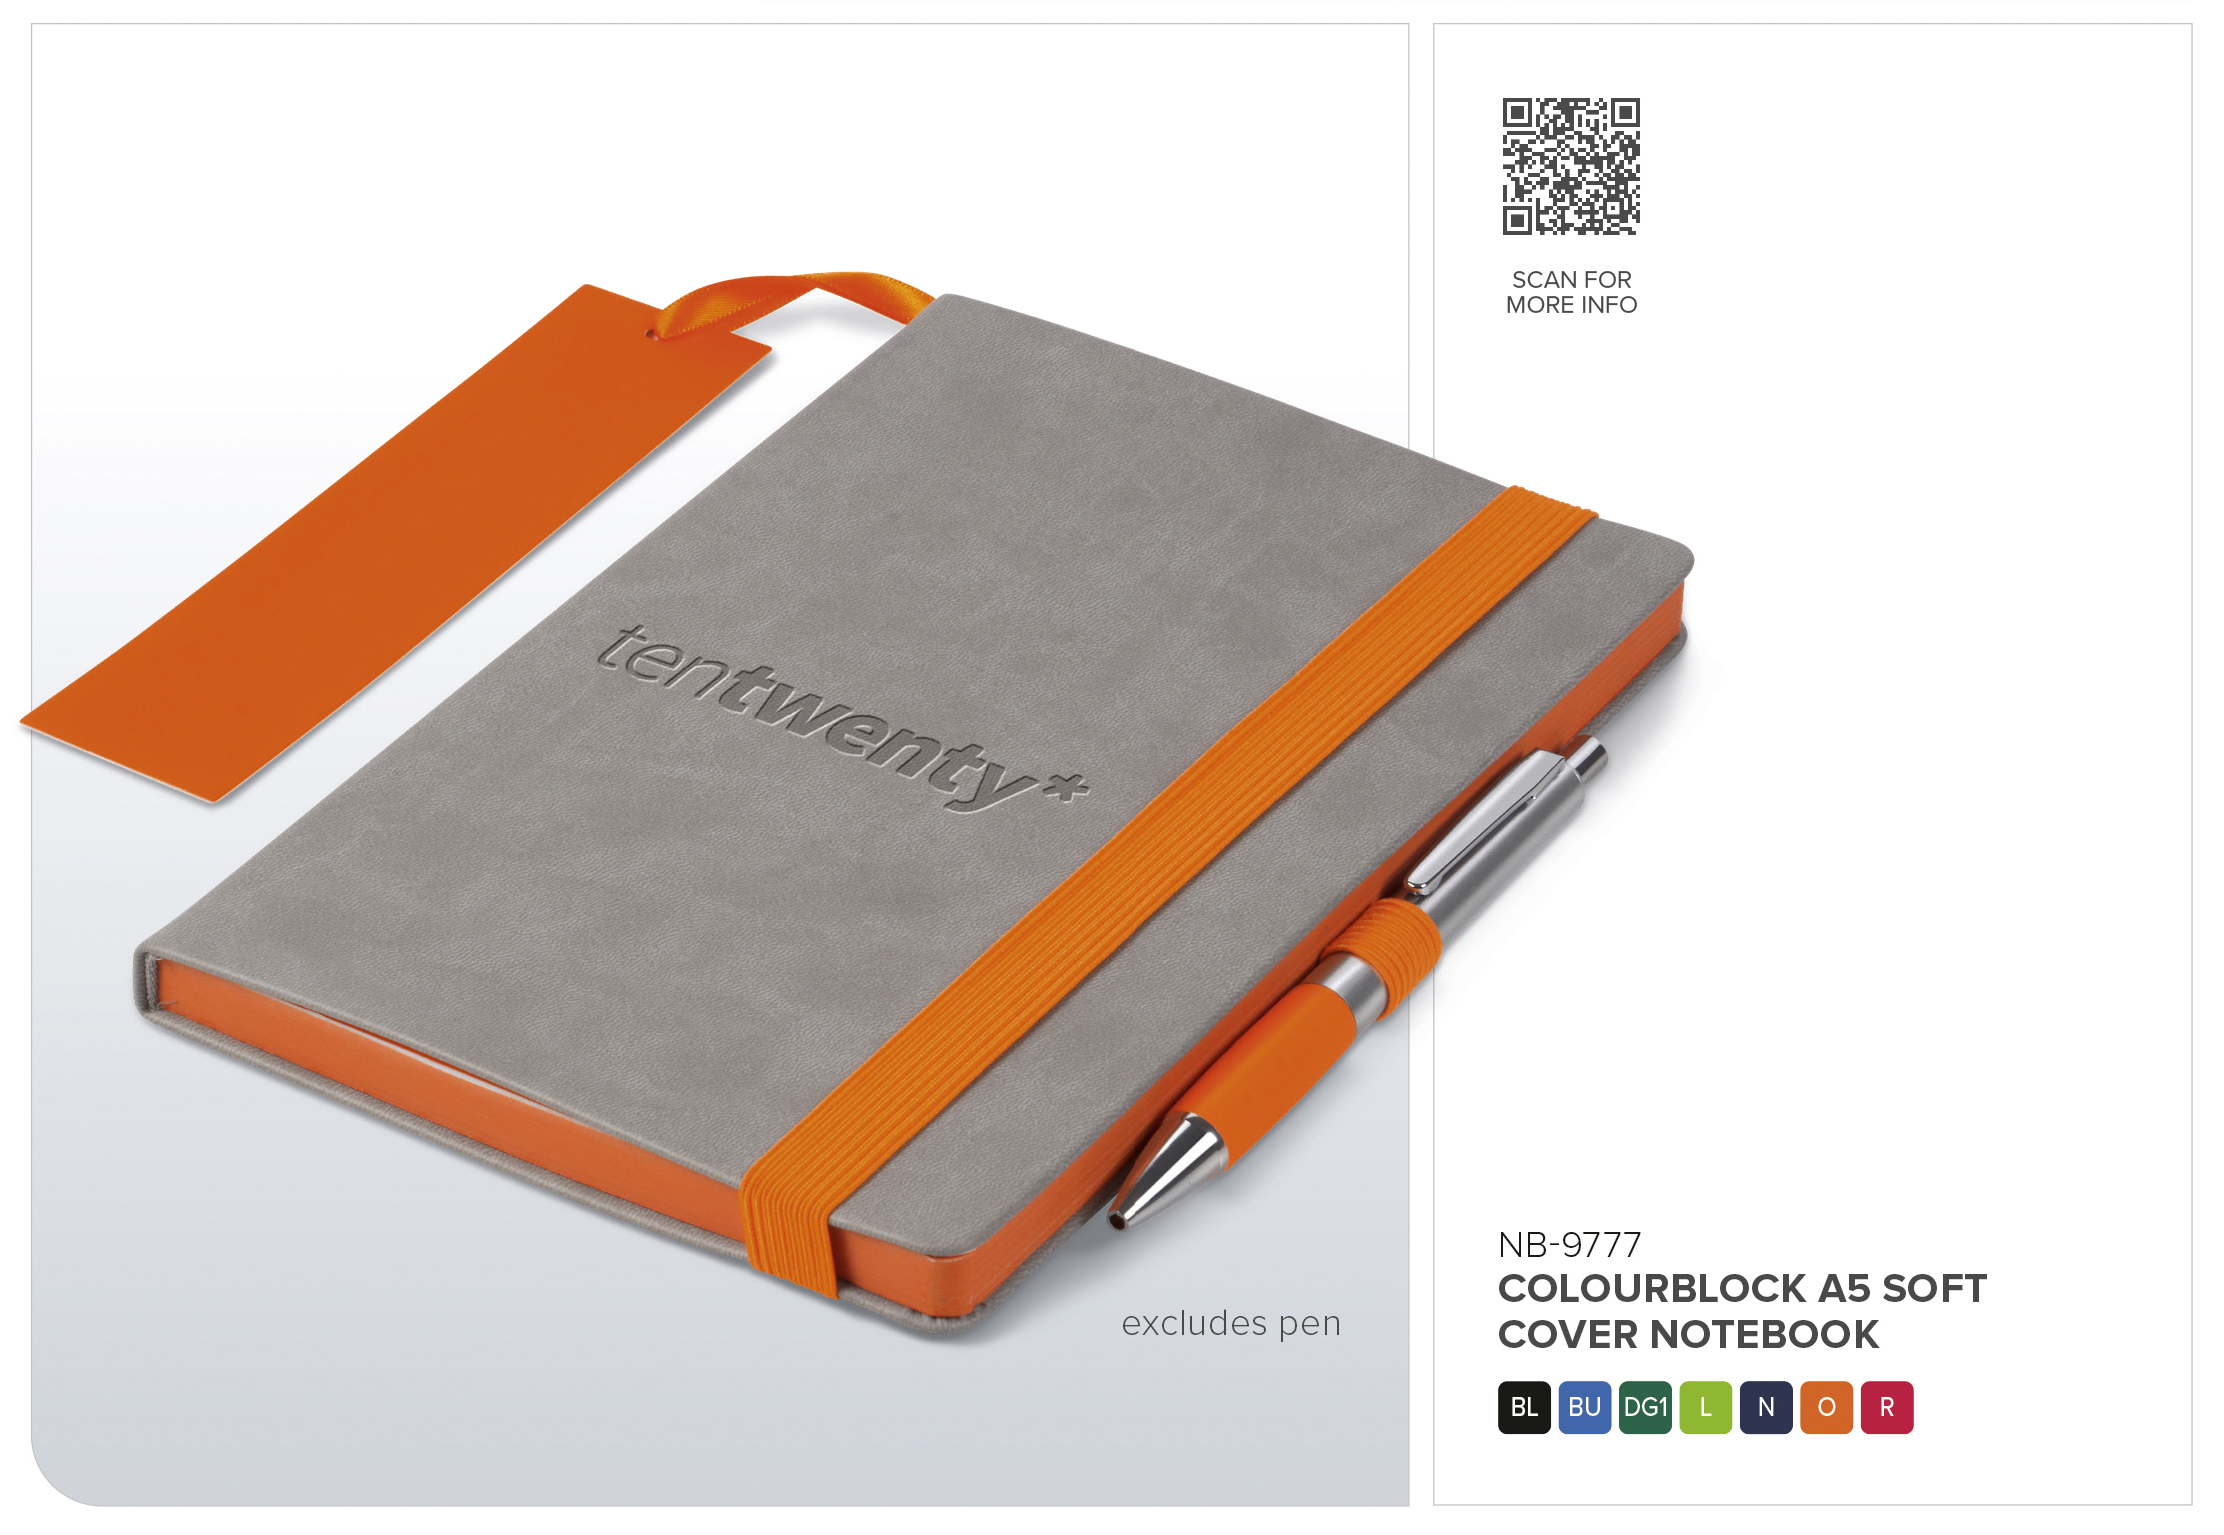 NB-9777 - Colourblock A5 Soft Cover Notebook - Catalogue Image